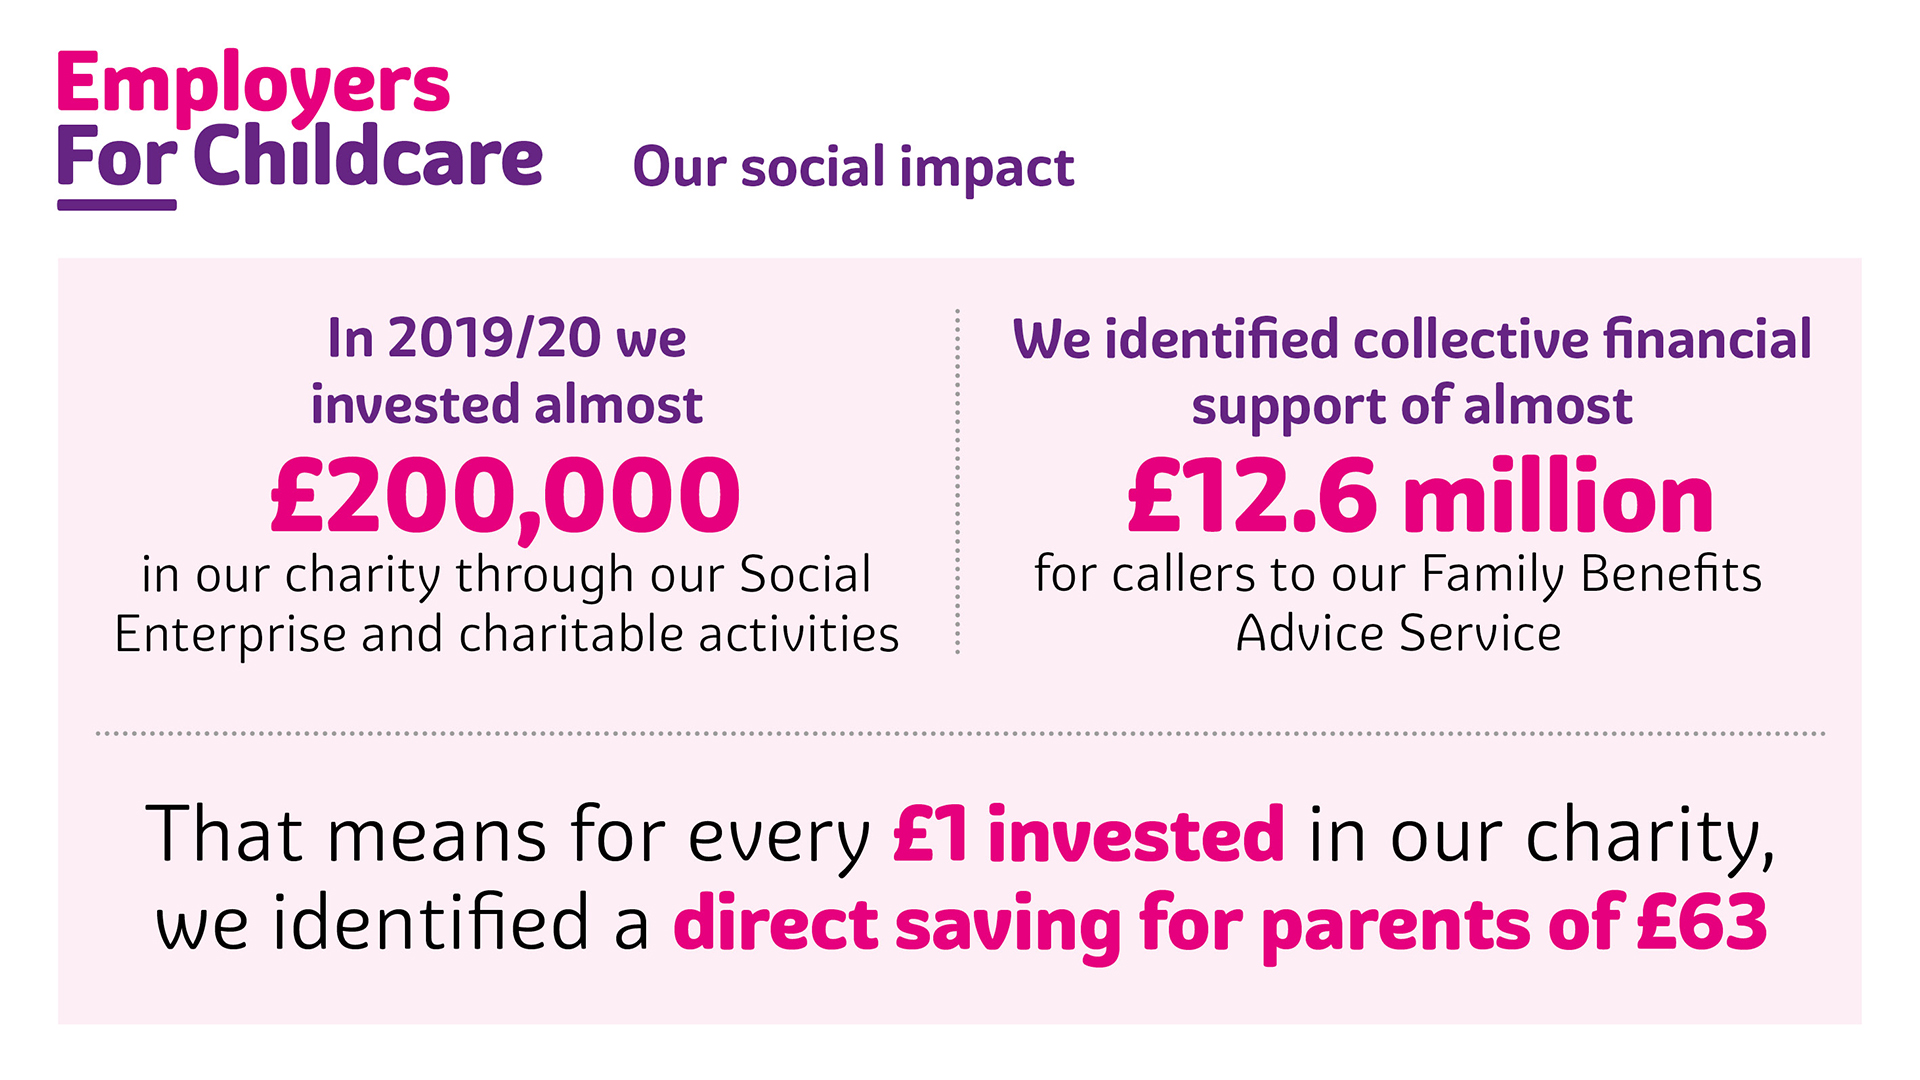 Our social impact   £12.6m